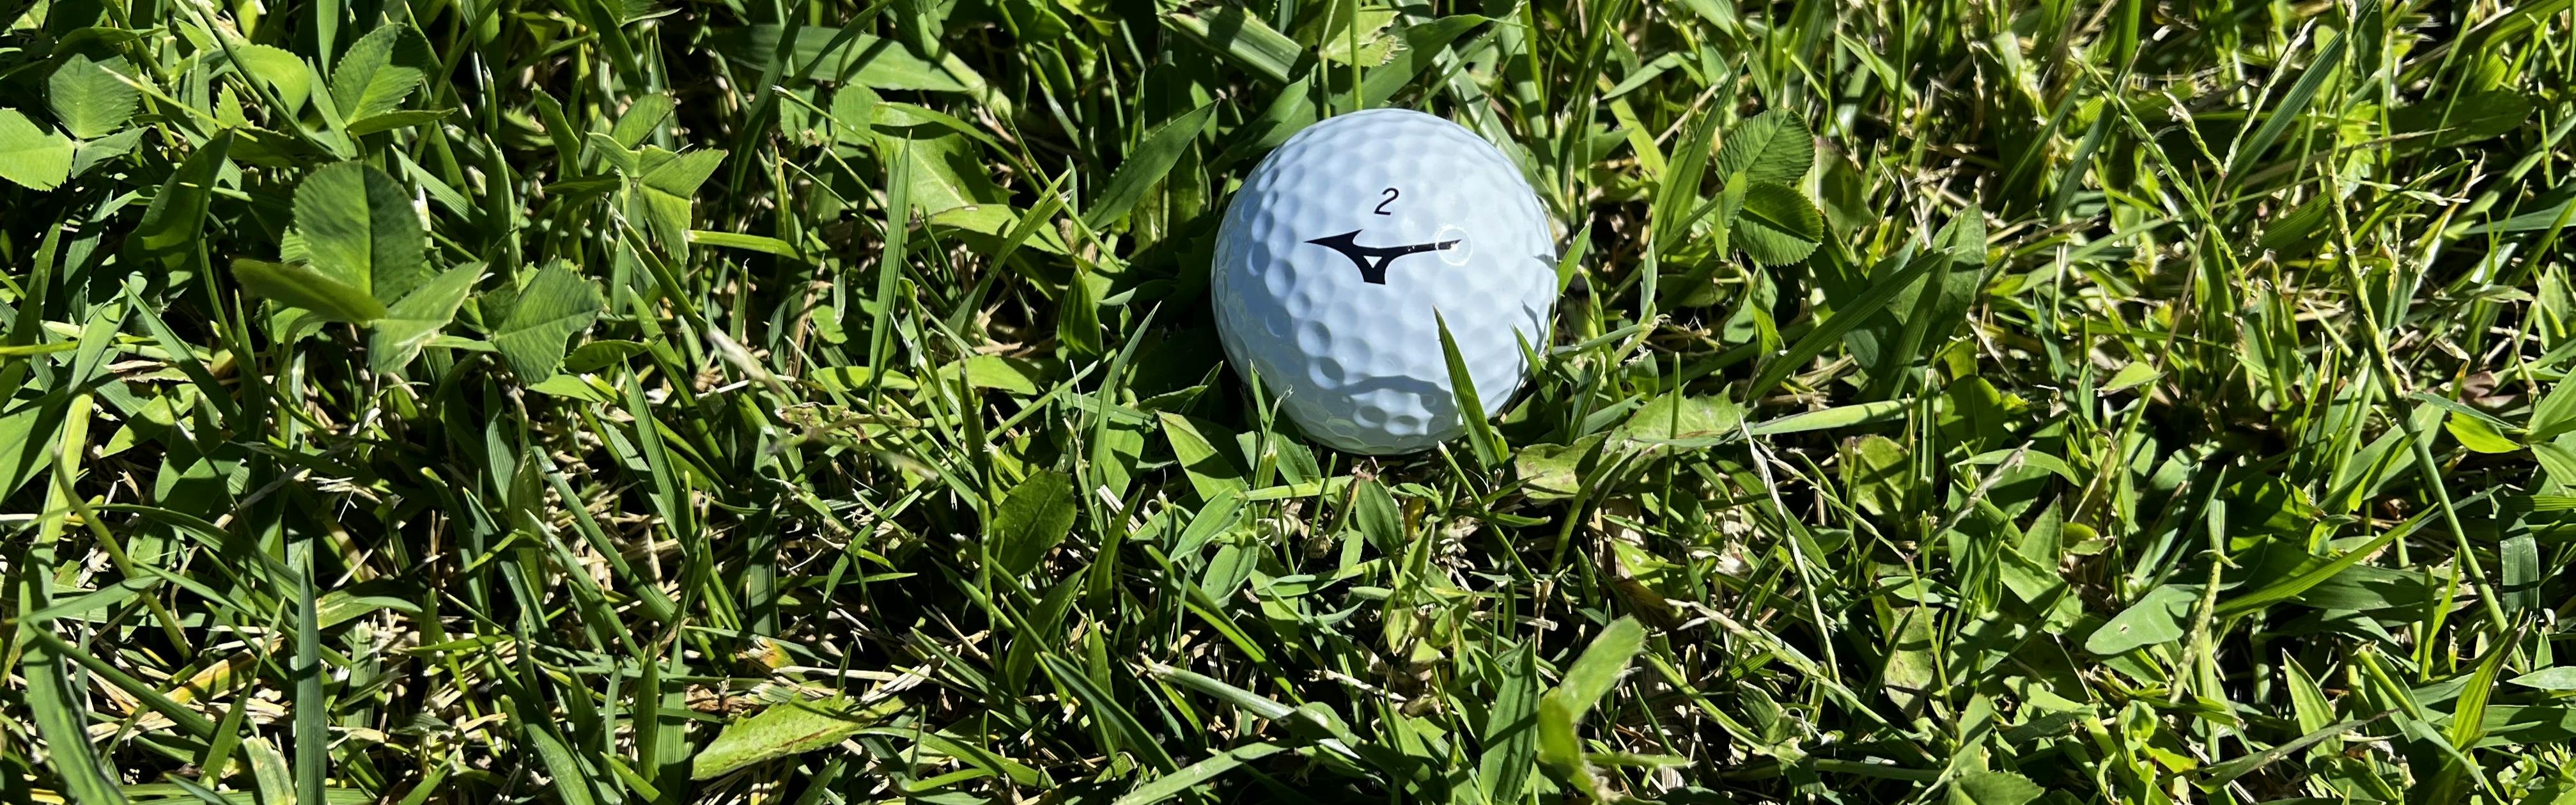 A Mizuno RB Tour X Golf Ball lying in the grass.